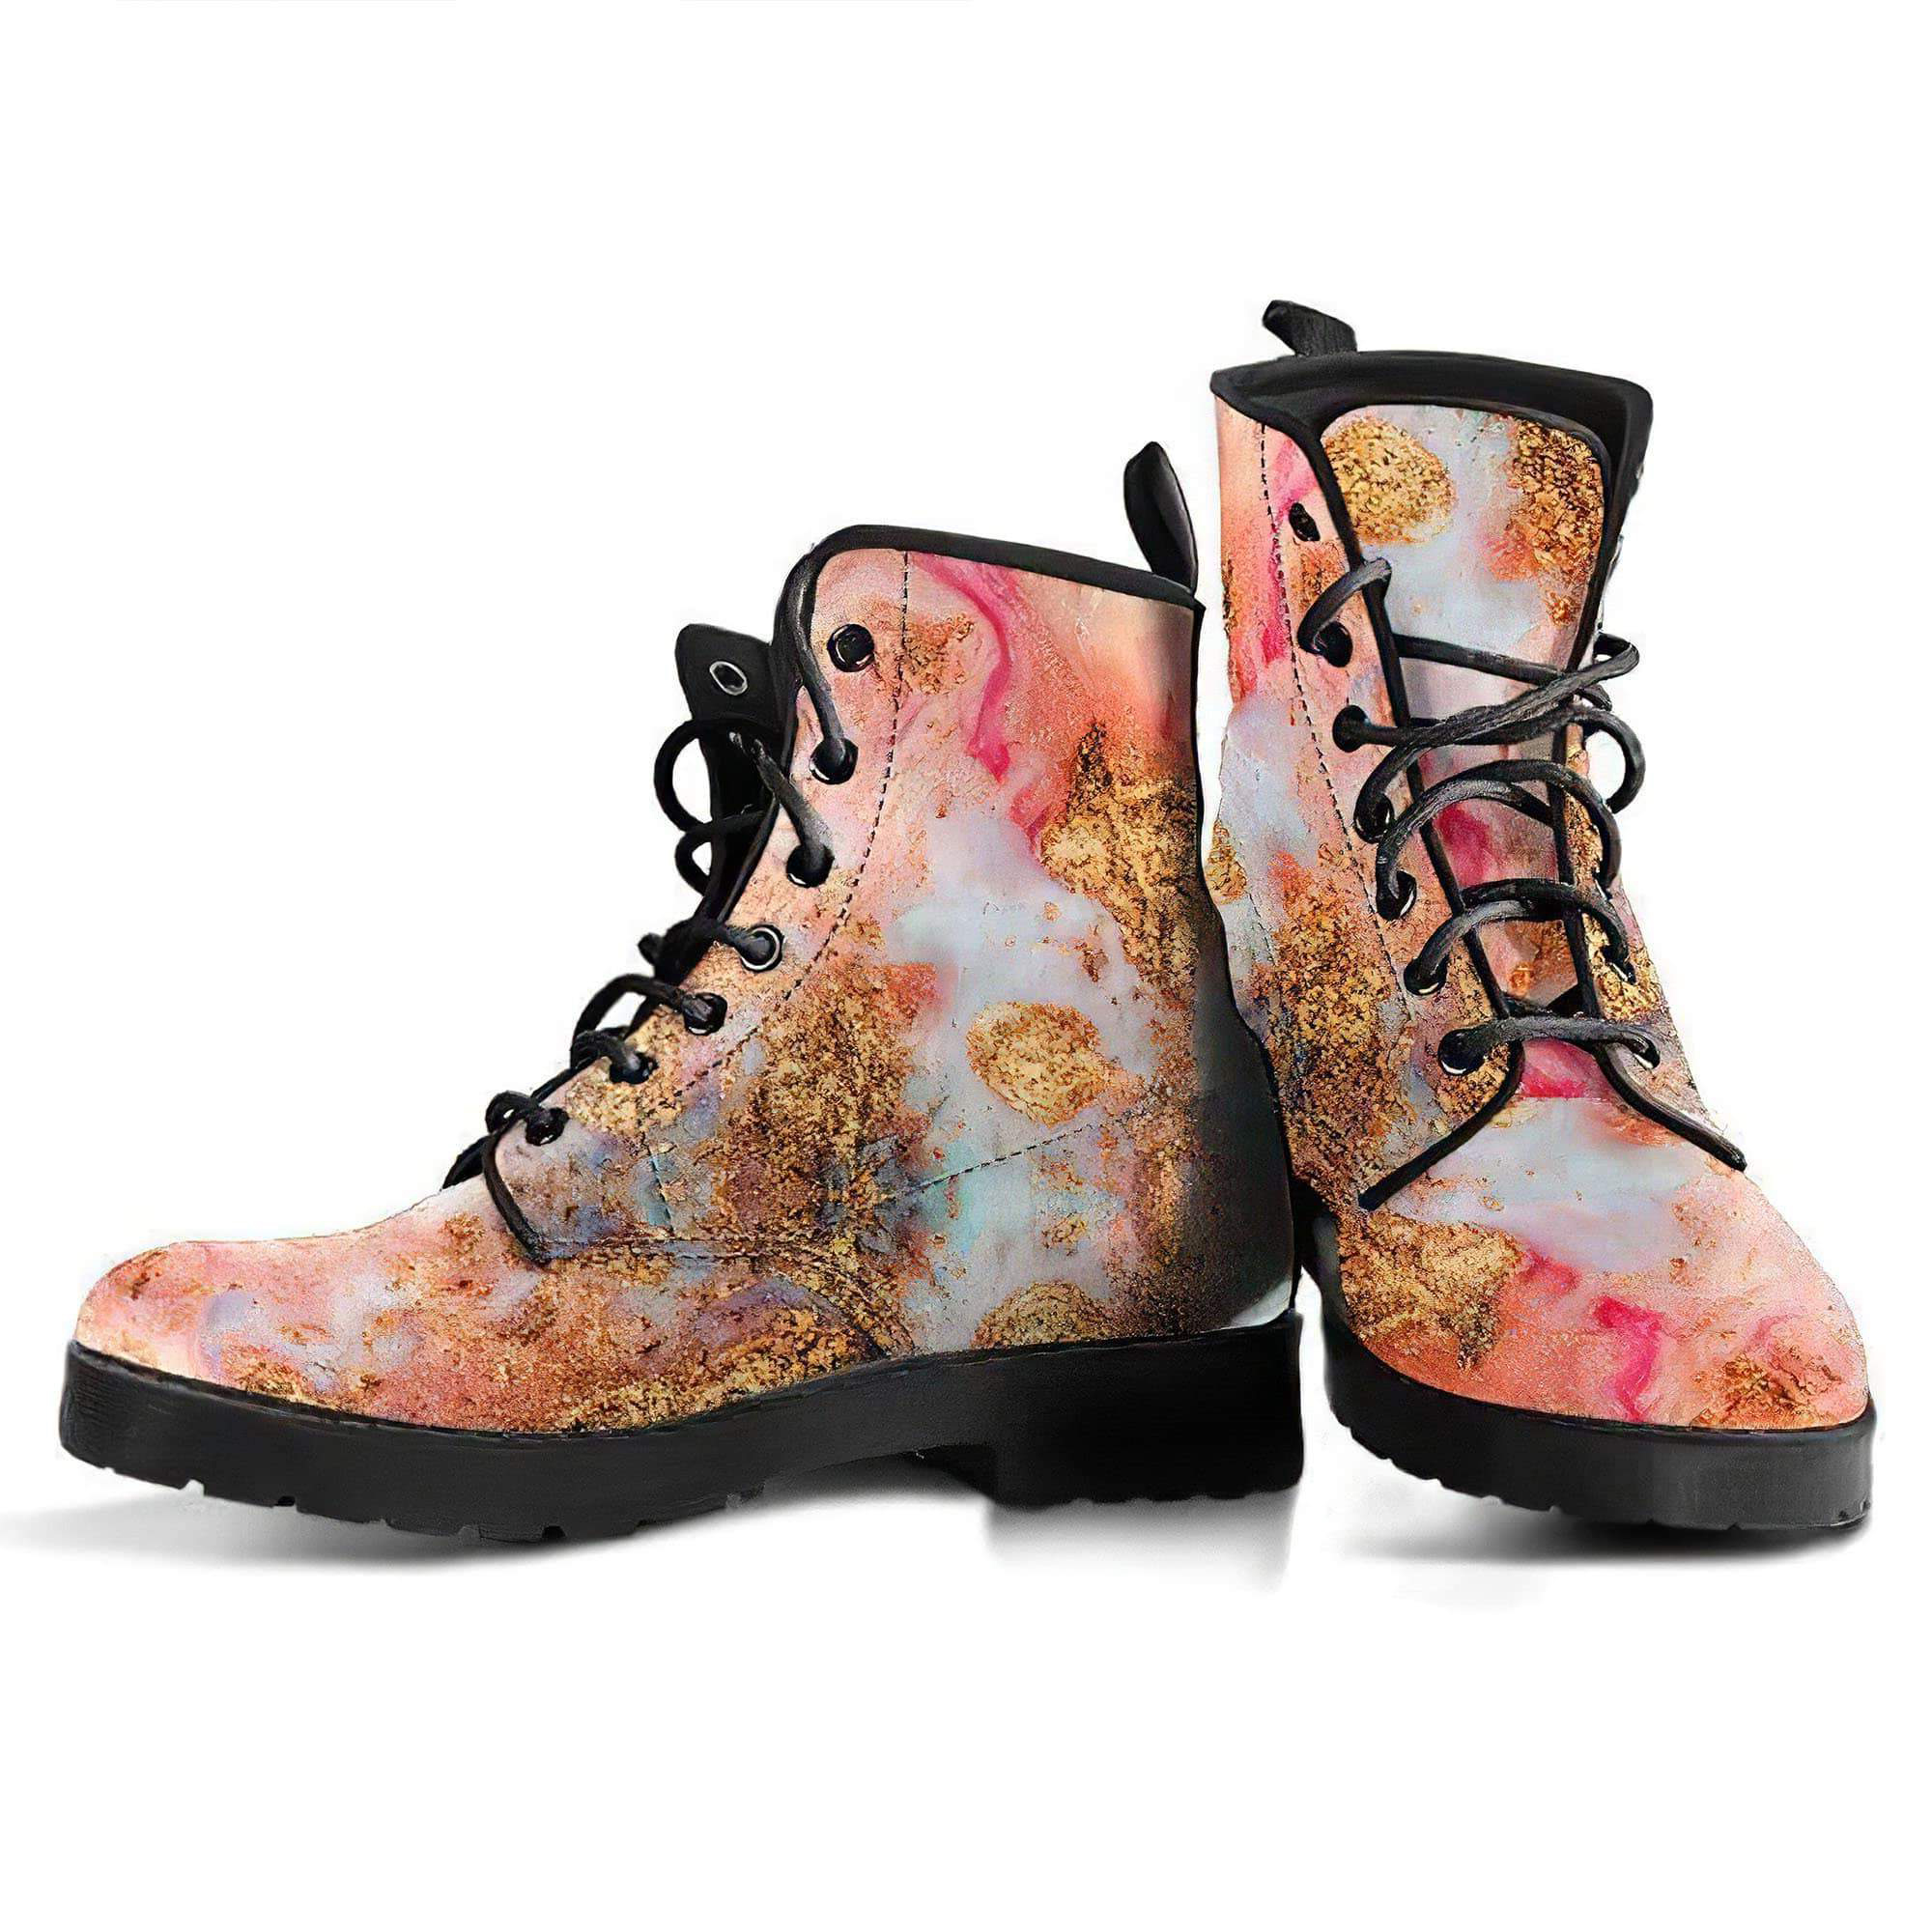 tye-dye-handcrafted-boots-women-s-leather-boots-12051970949181.jpg